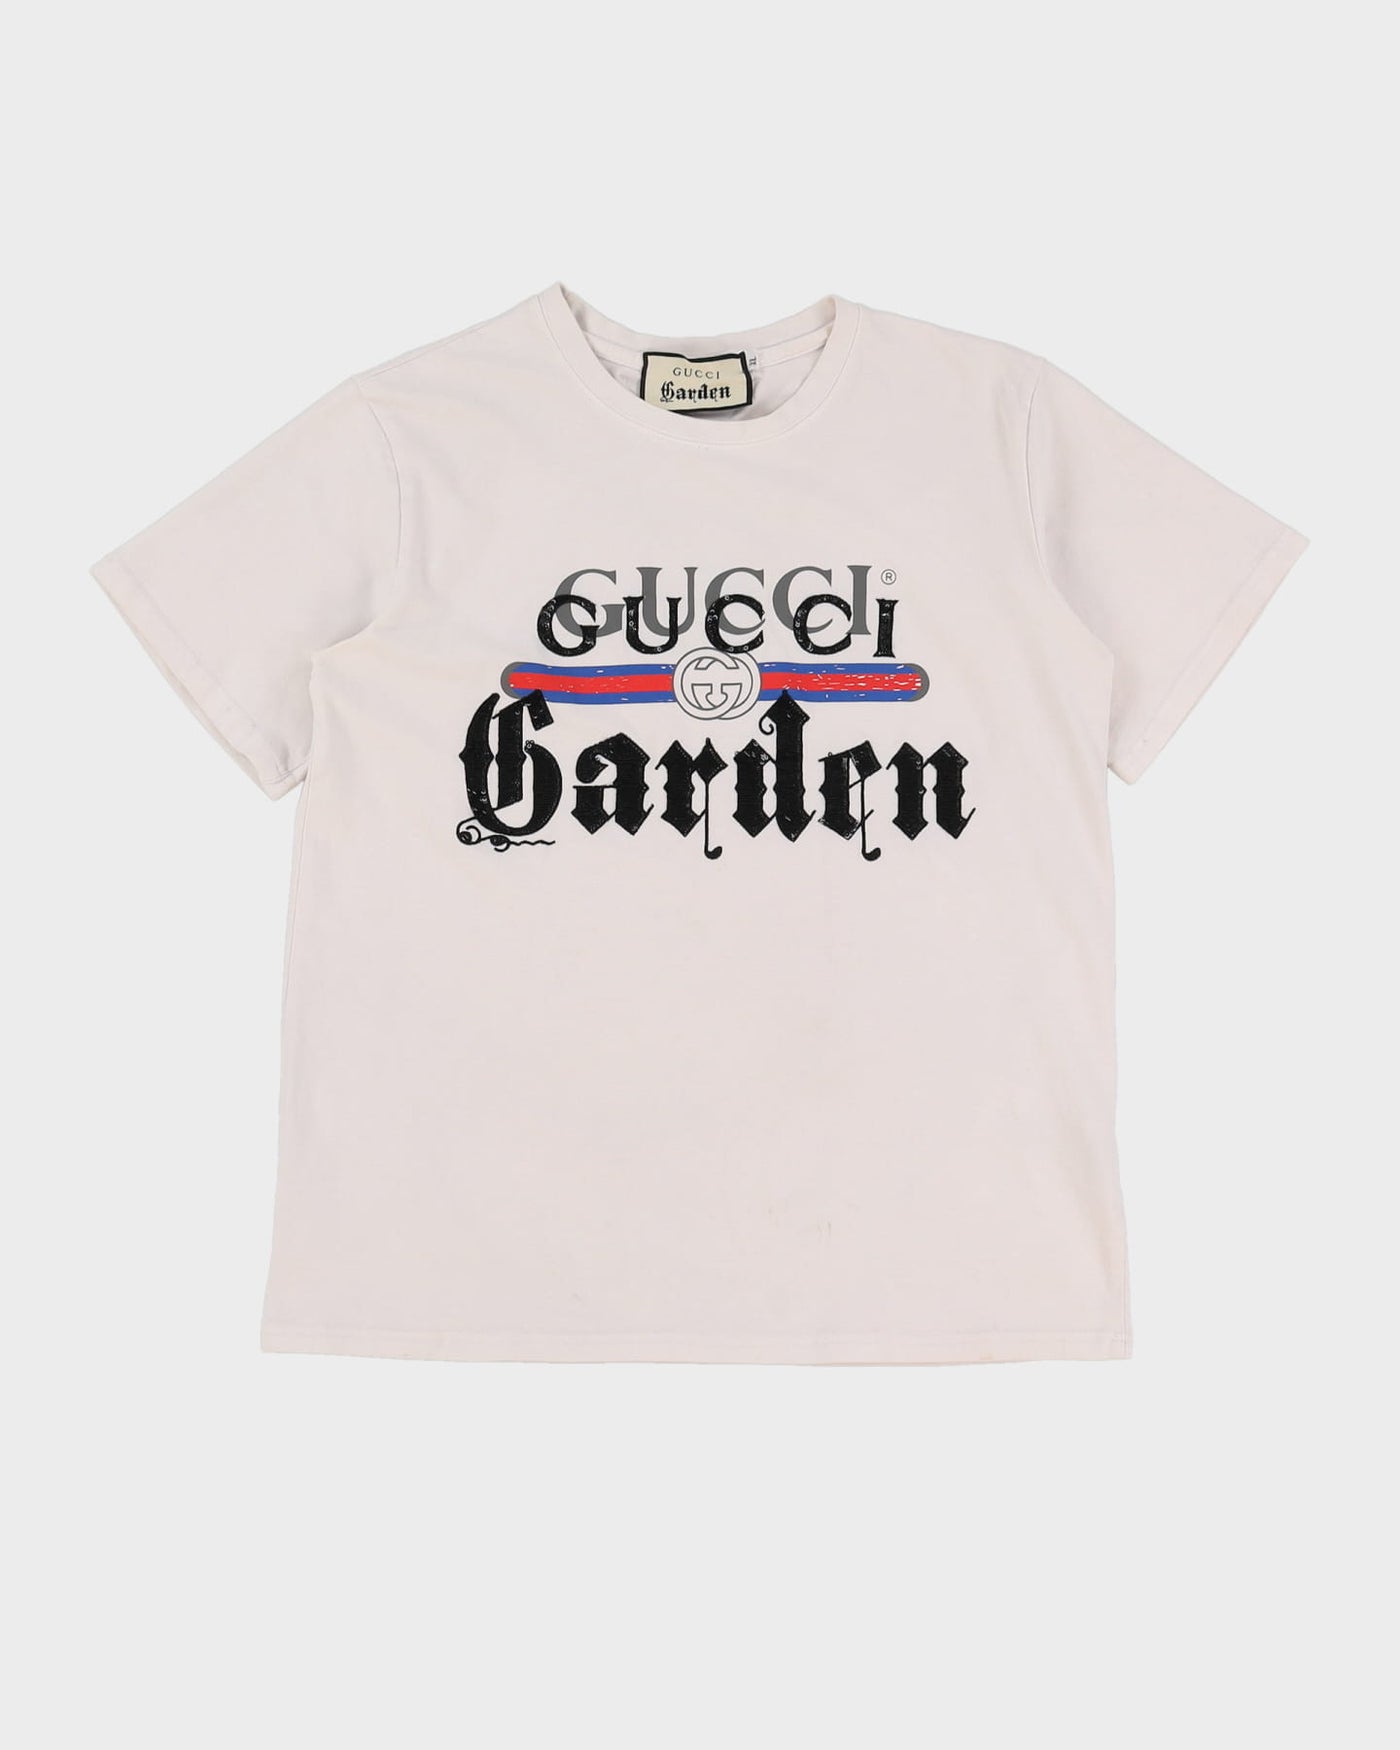 Gucci Garden White T-Shirt - XL